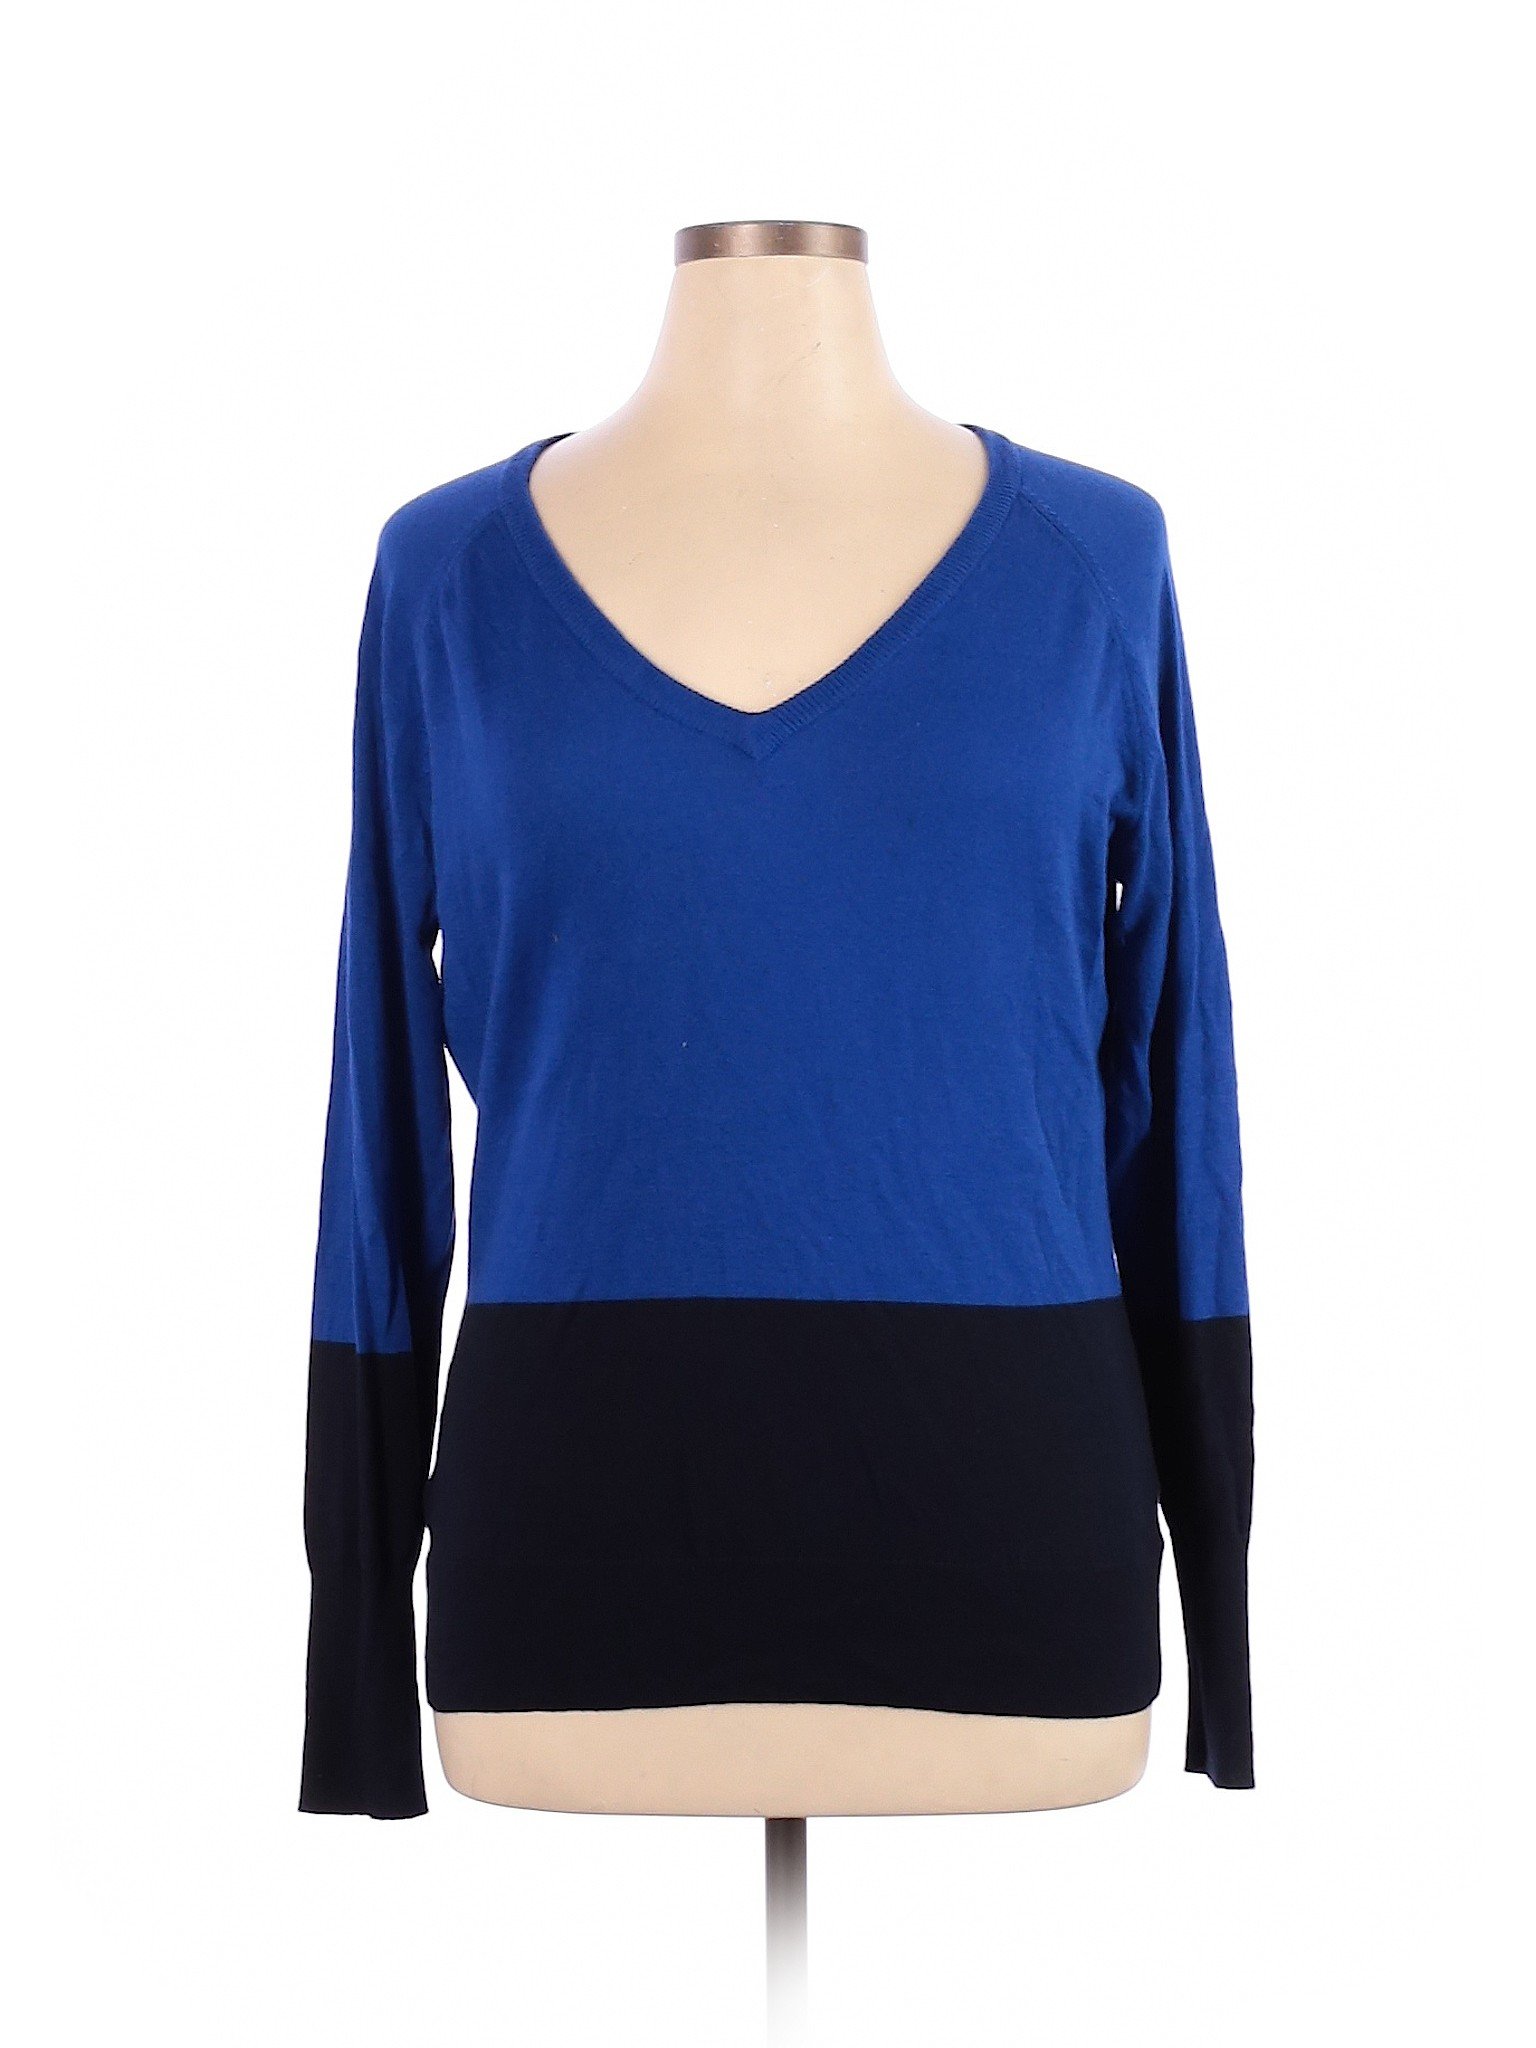 Jcpenney Women Blue Pullover Sweater XL | eBay